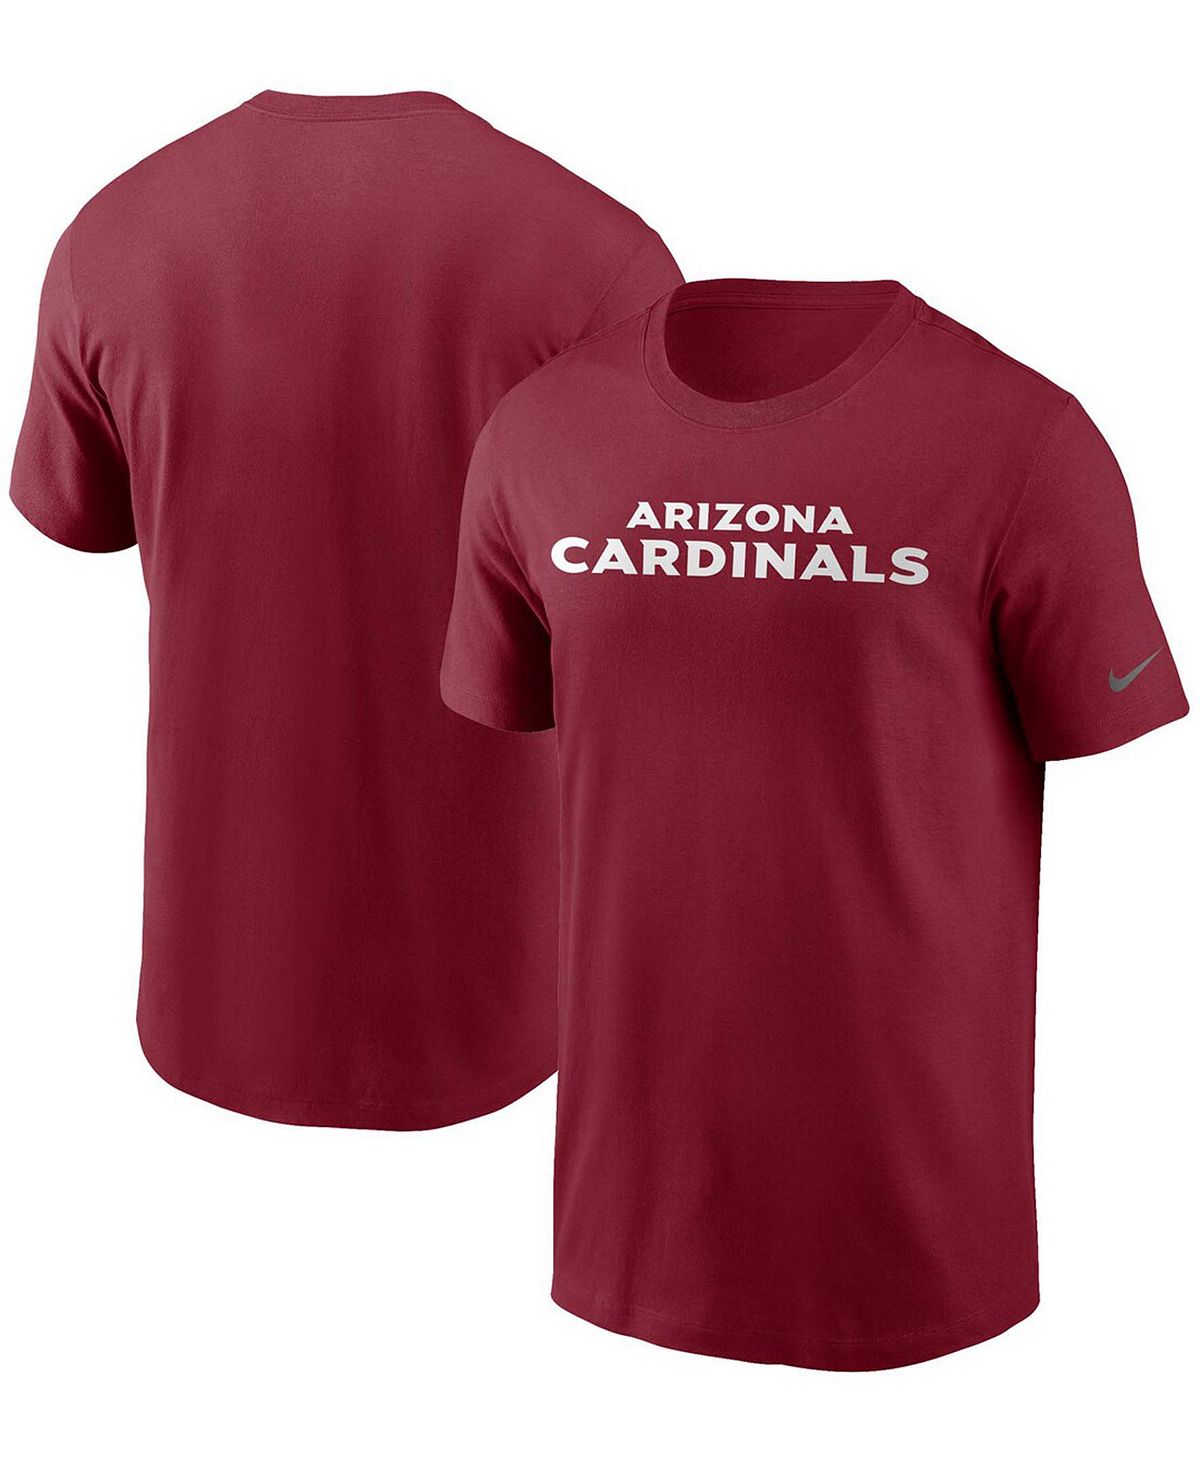 Мужская футболка Cardinal Arizona Cardinals Team с надписью Nike